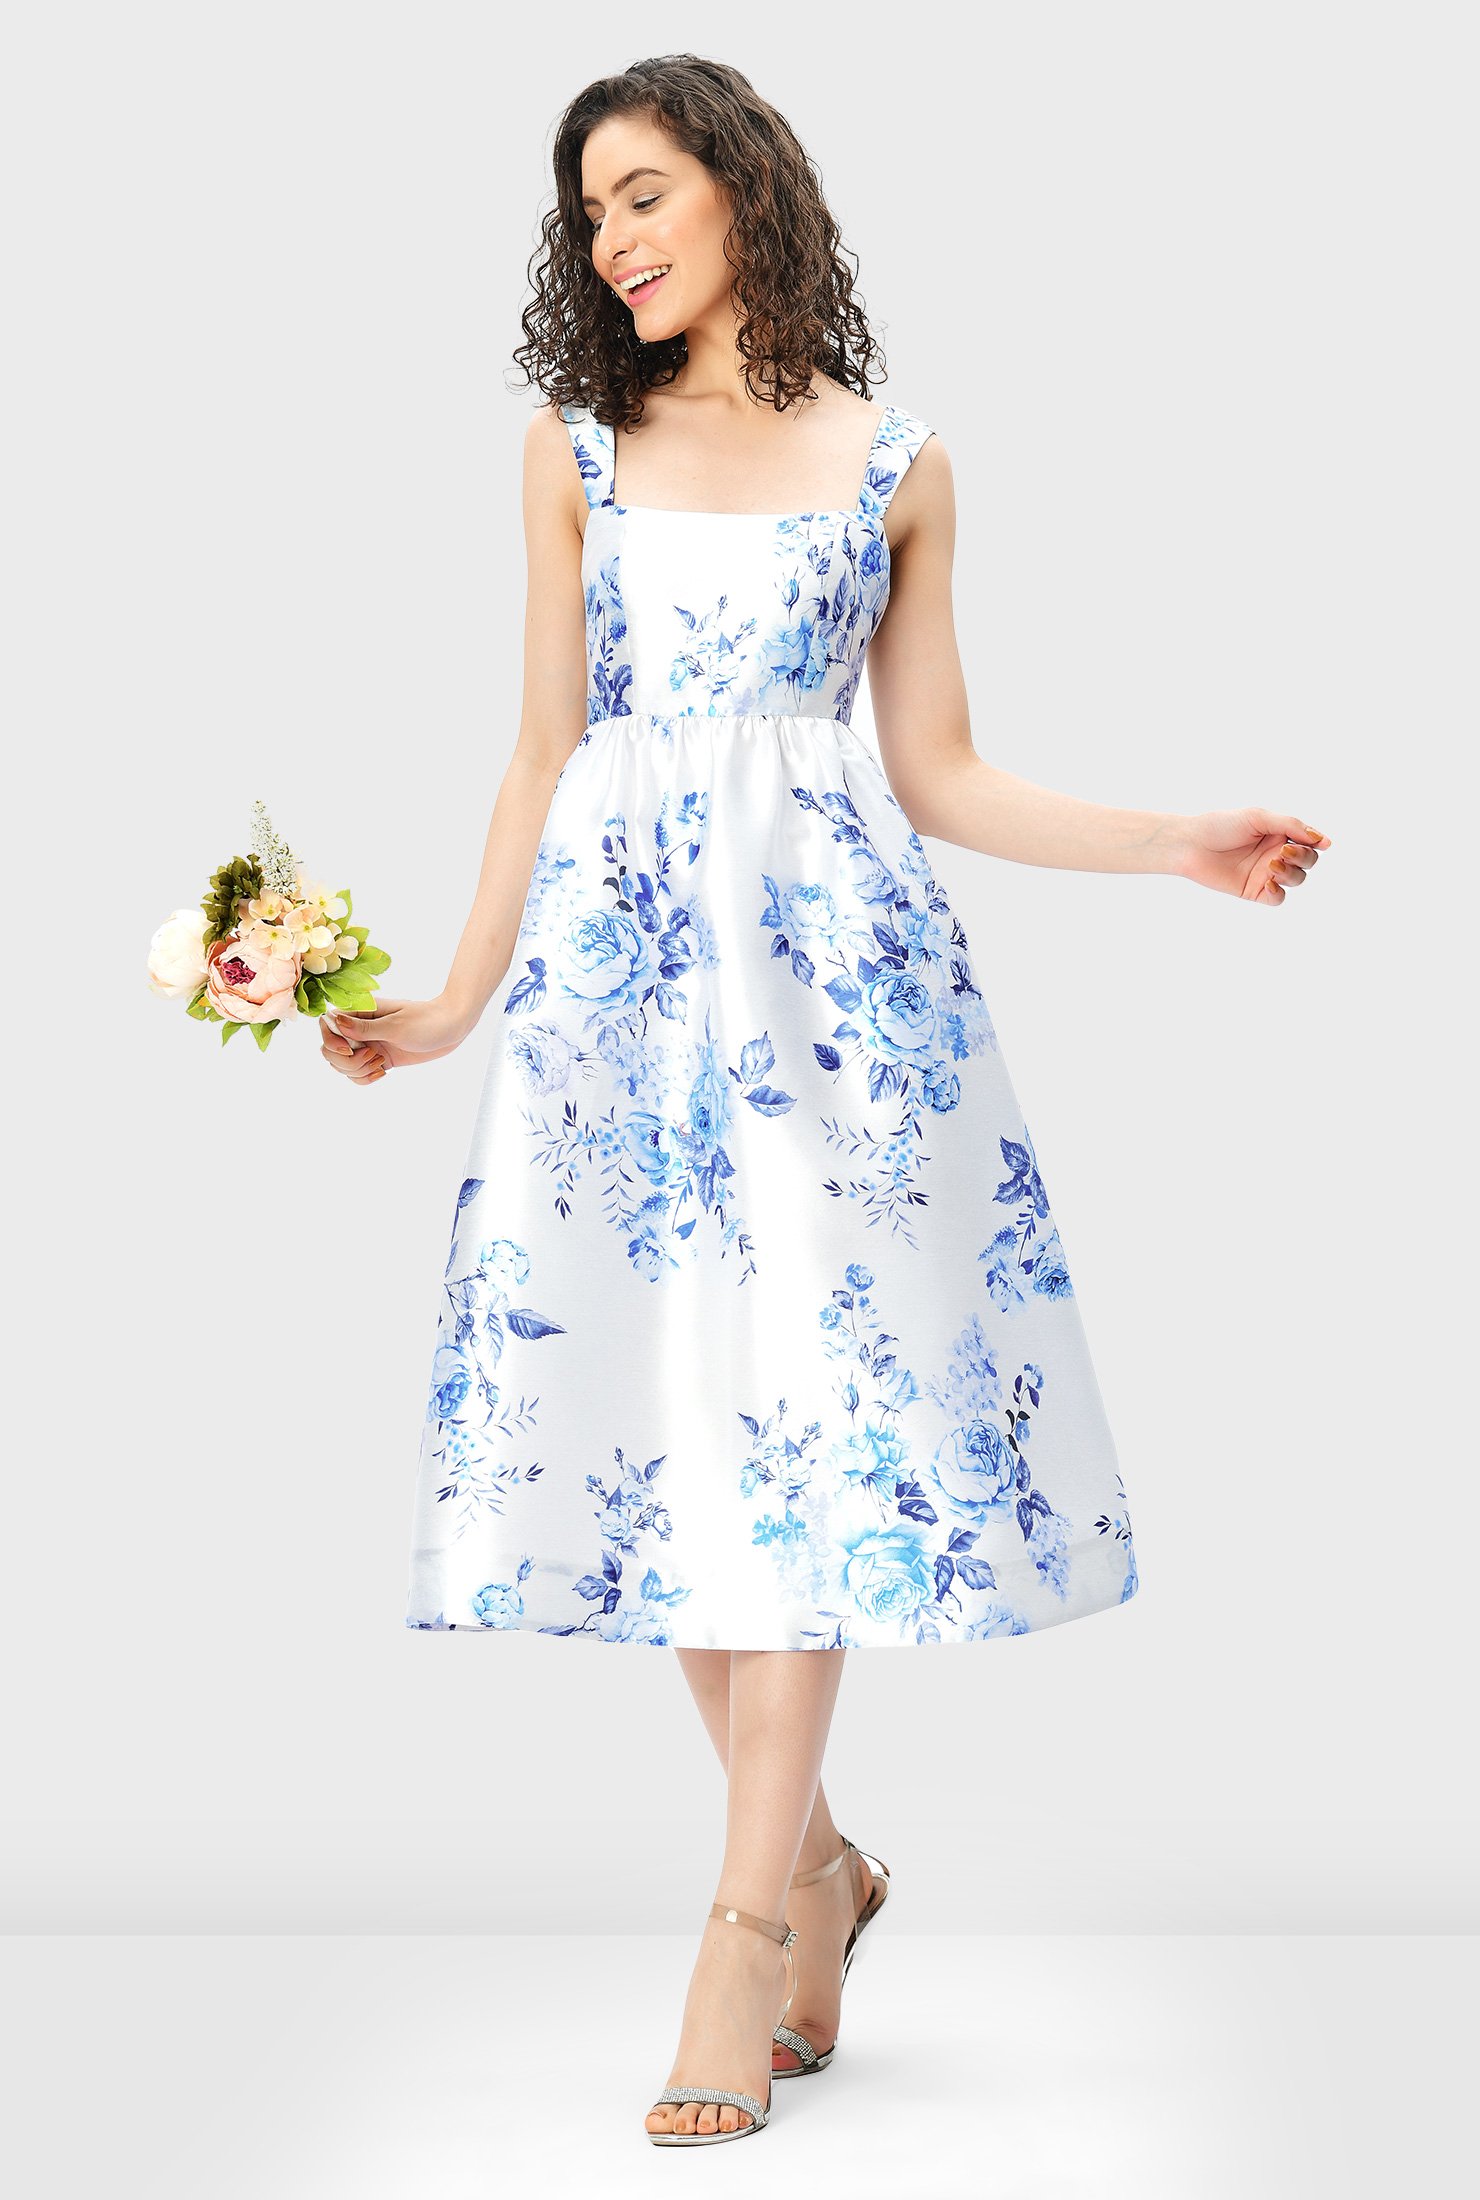 Shop Classic floral print summer dress eShakti